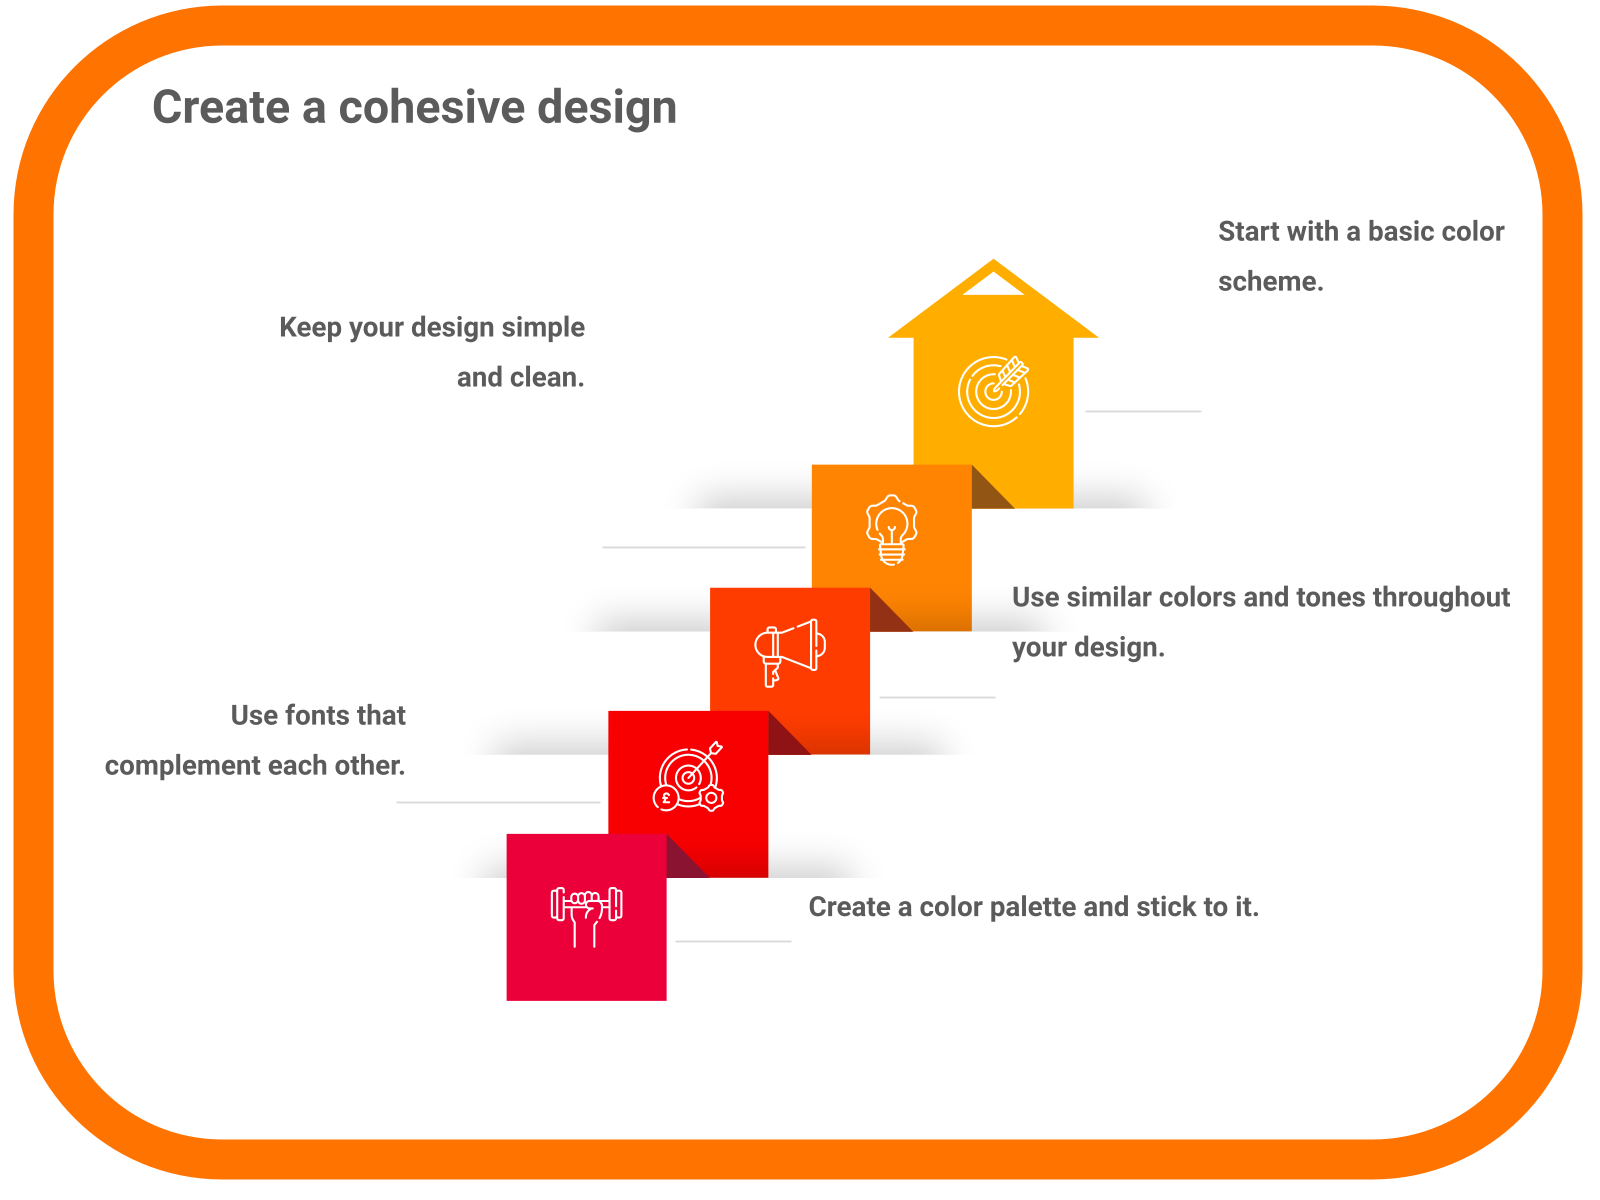 Create a cohesive design